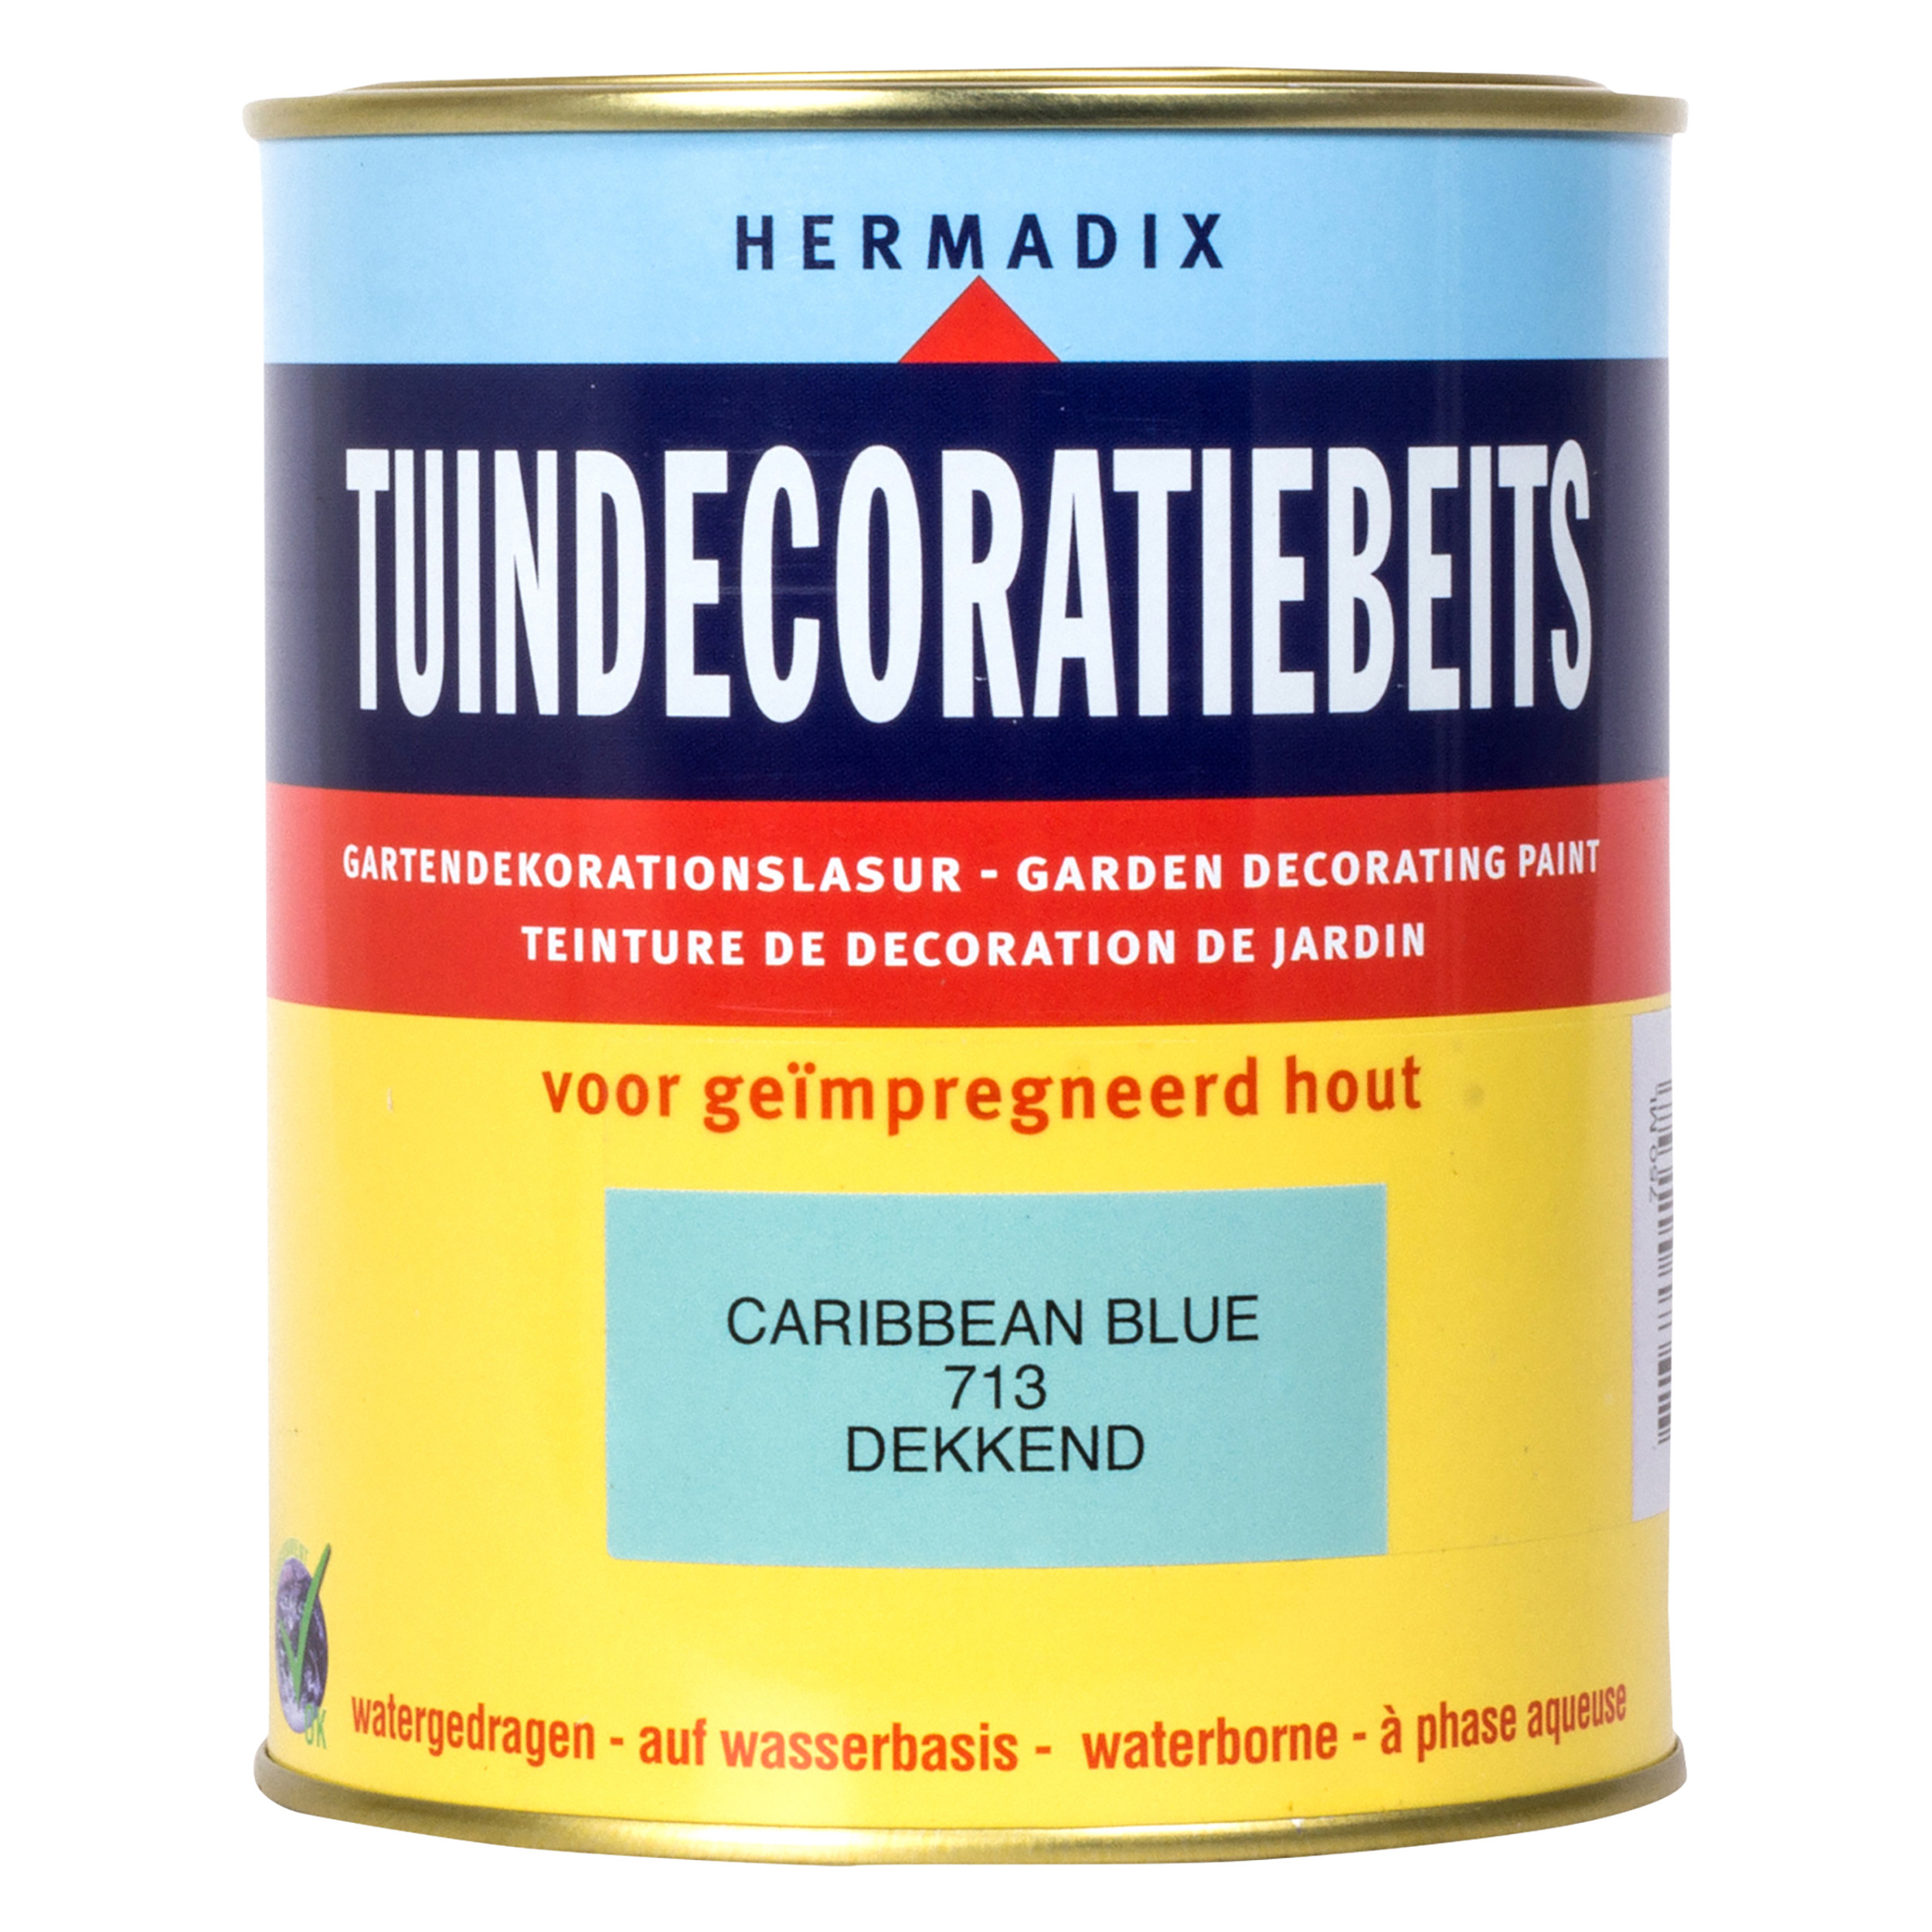 25.871.31 Hermadix  tuindecoratiebeits mat - 750 ml - caribean blue (713) dekkend